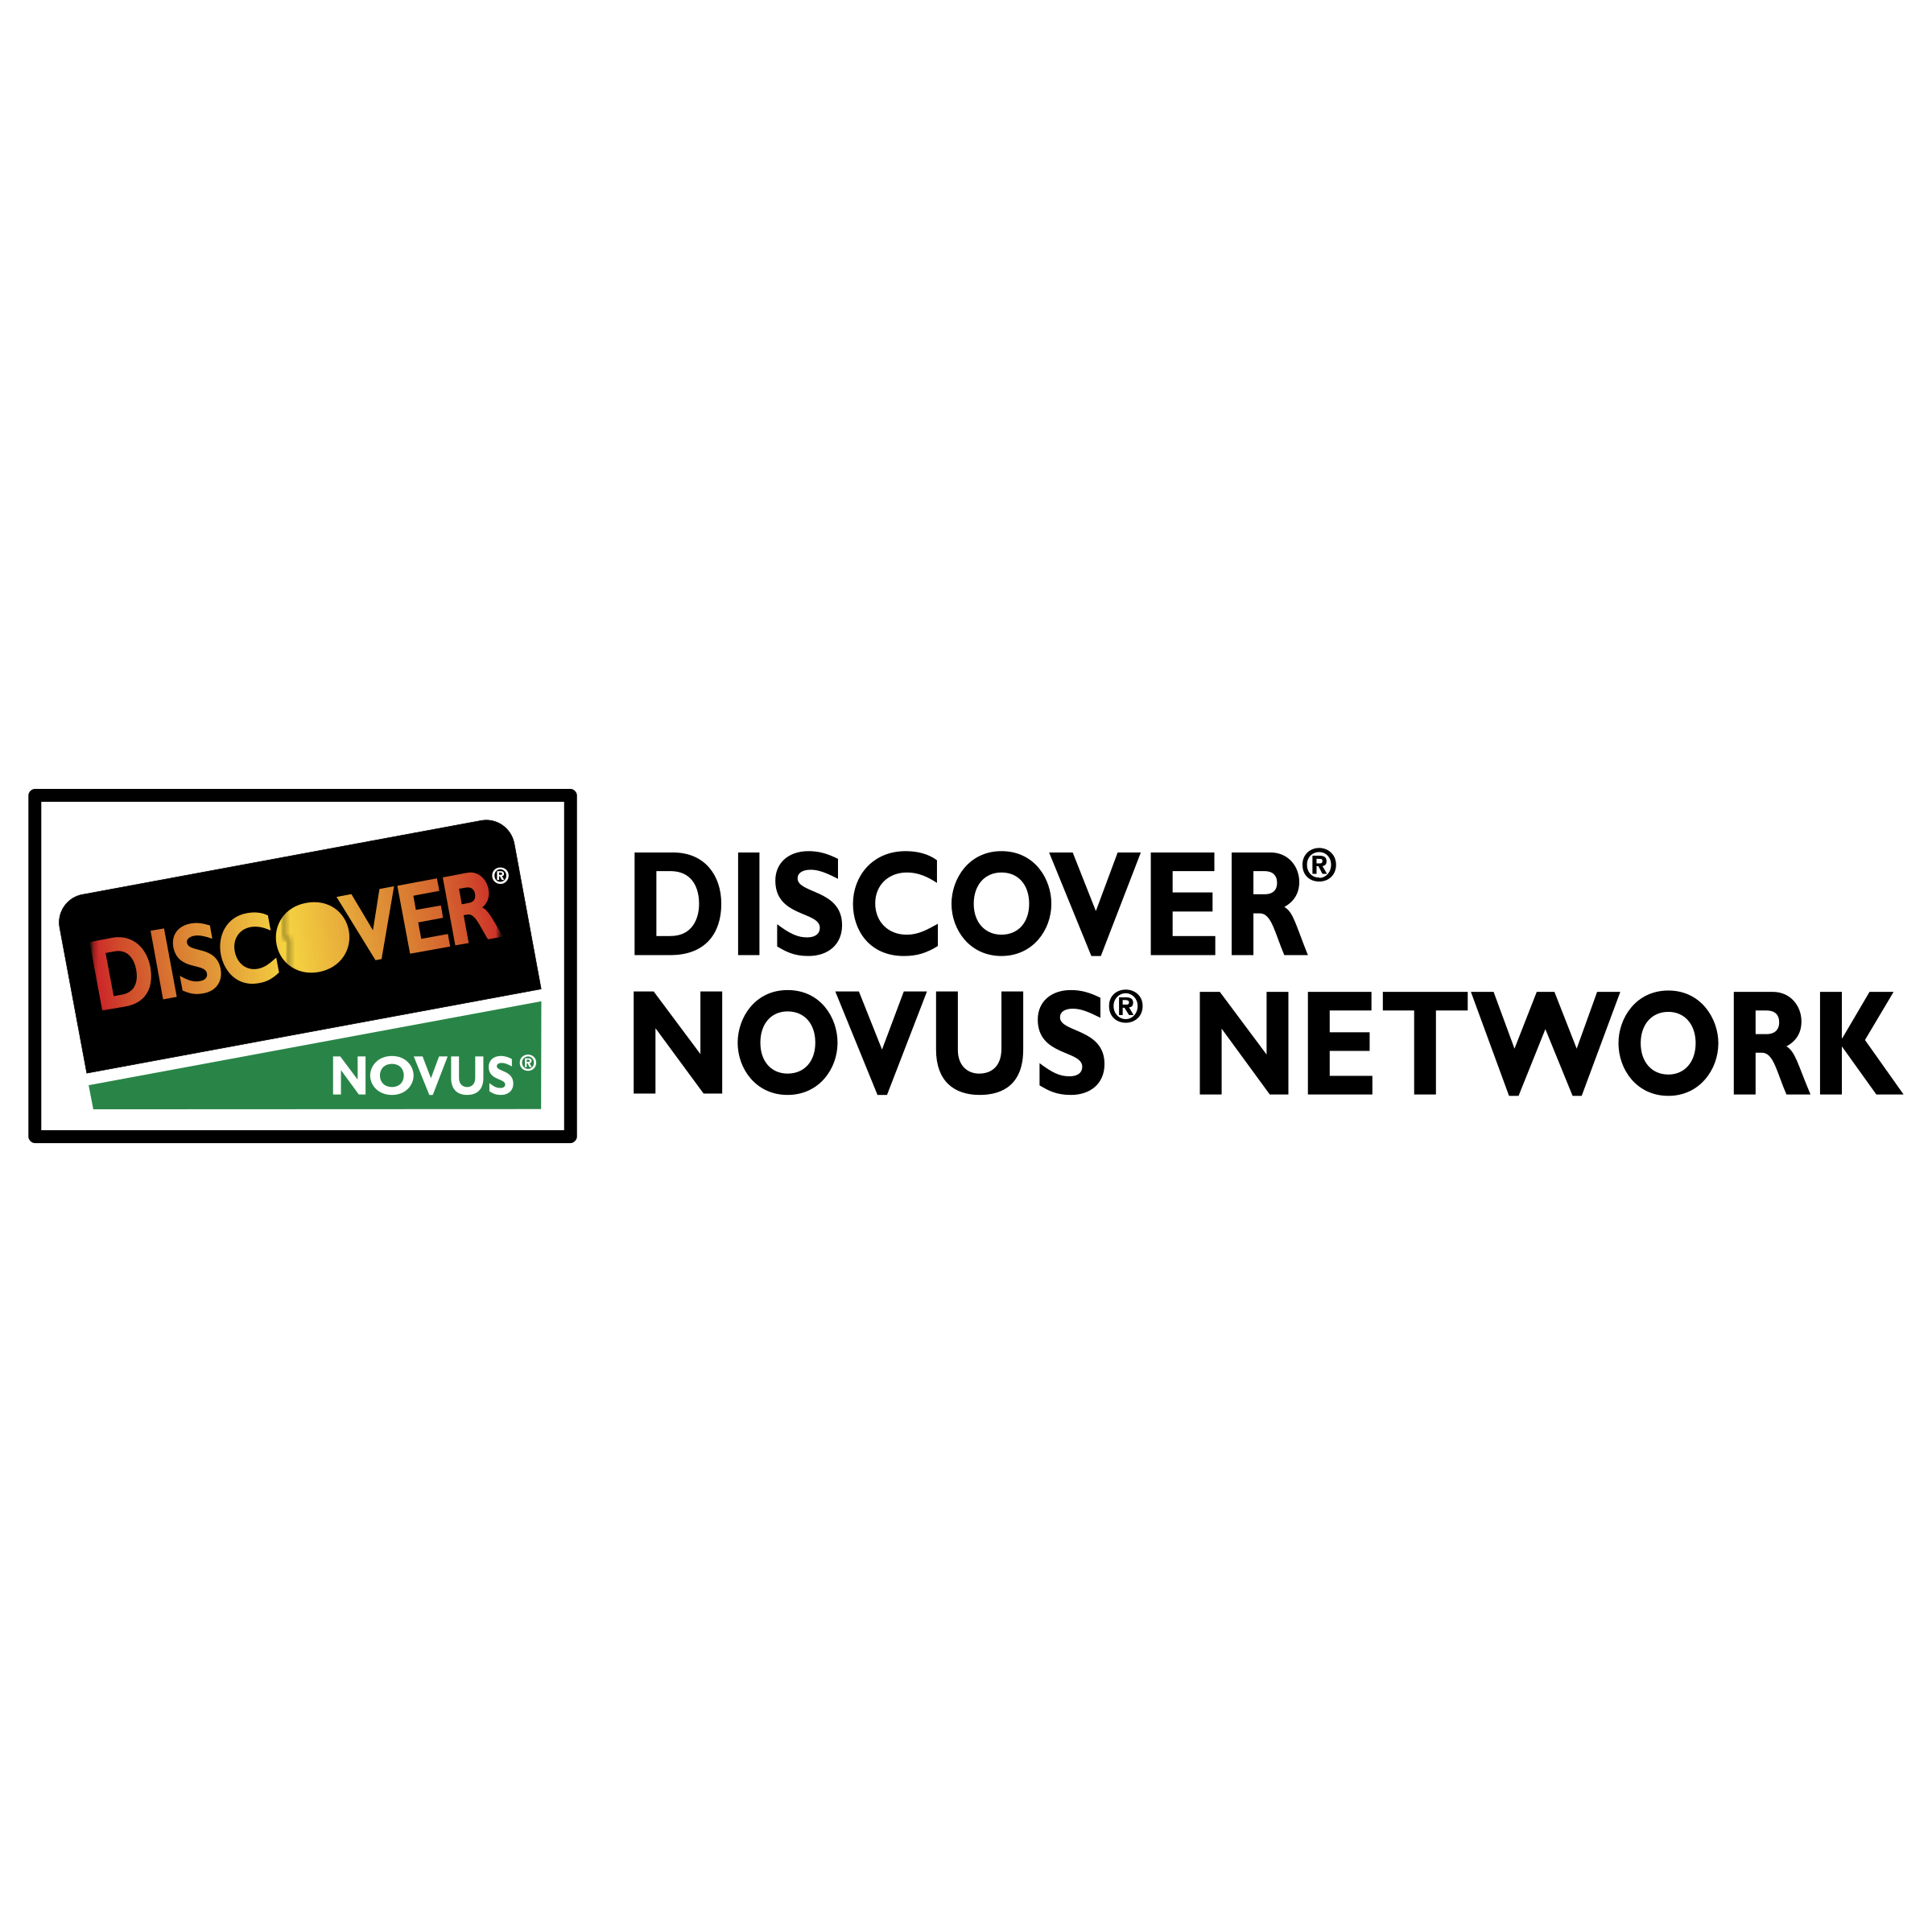 Discover Network Logo - Discover Novus Network Logo PNG Transparent & SVG Vector - Freebie ...